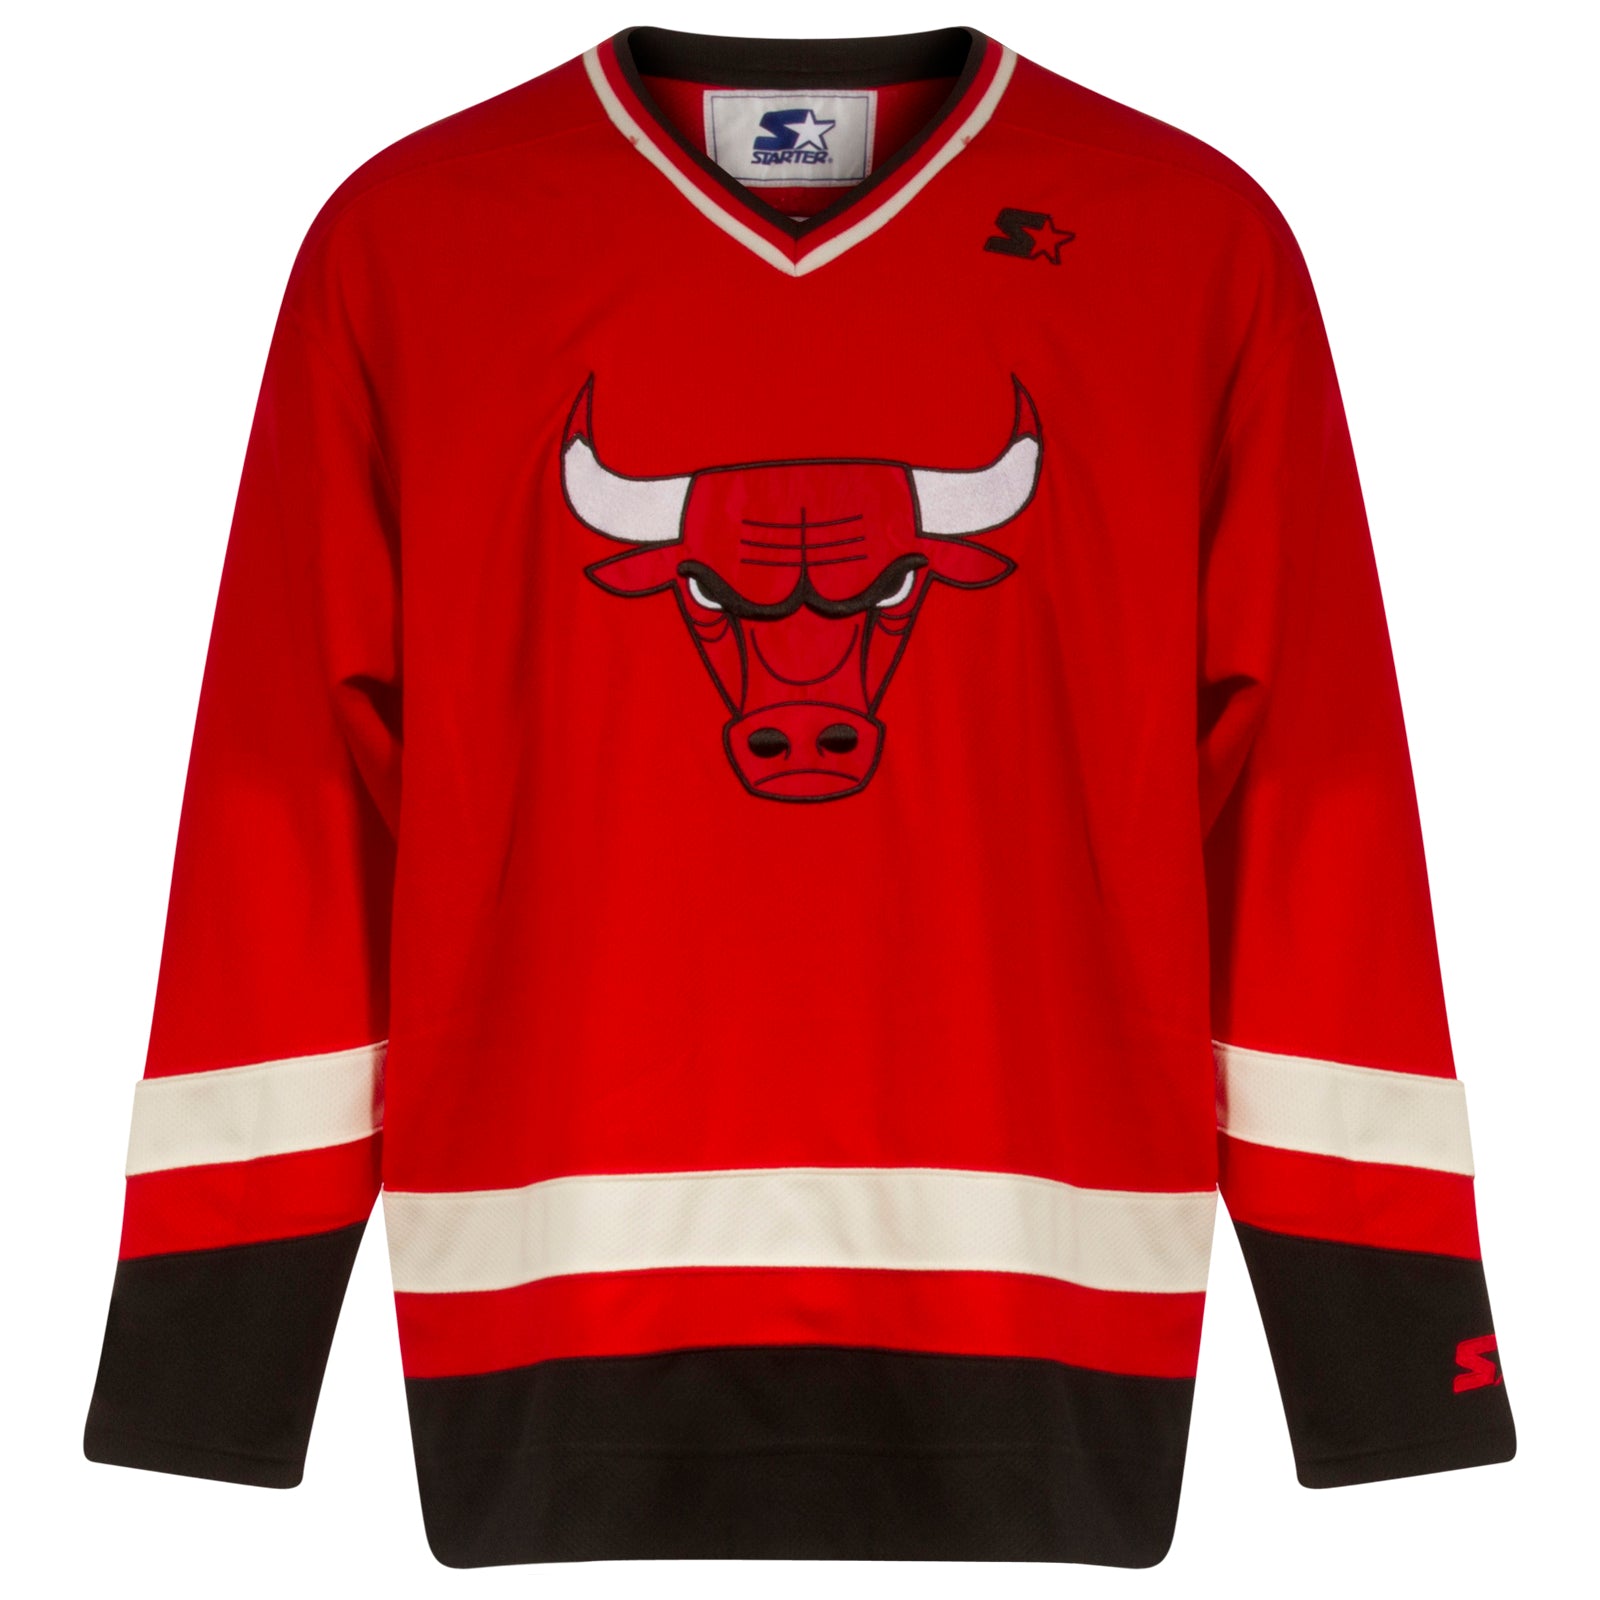 jersey red bulls